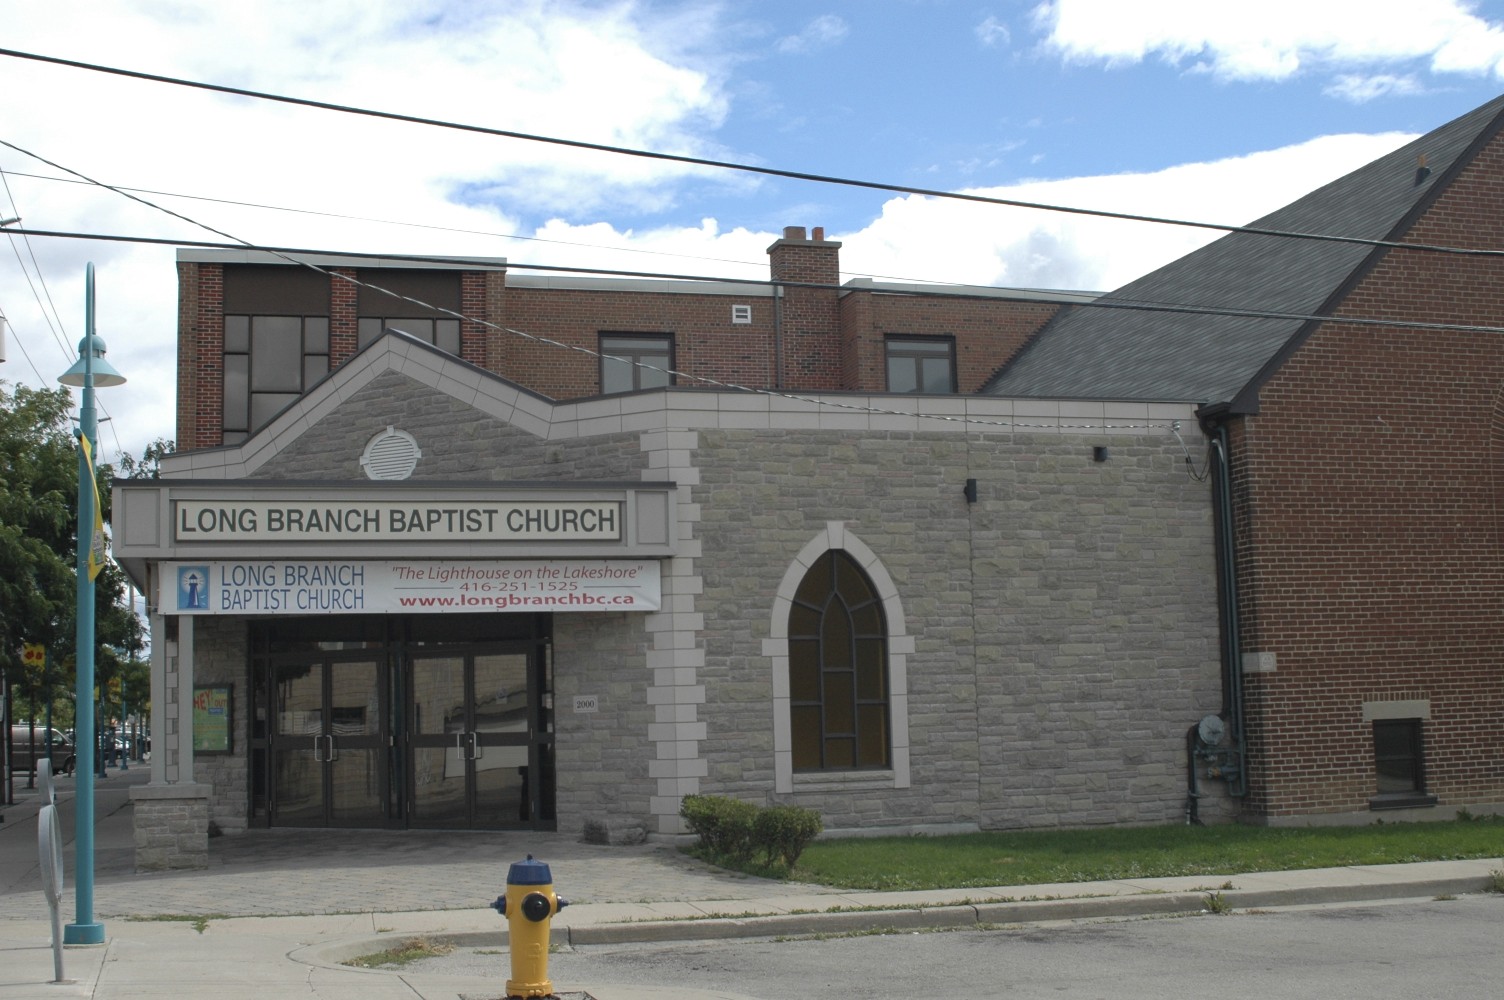 Photo of Long Branch Baptist Church on Lake Shore Blvd.